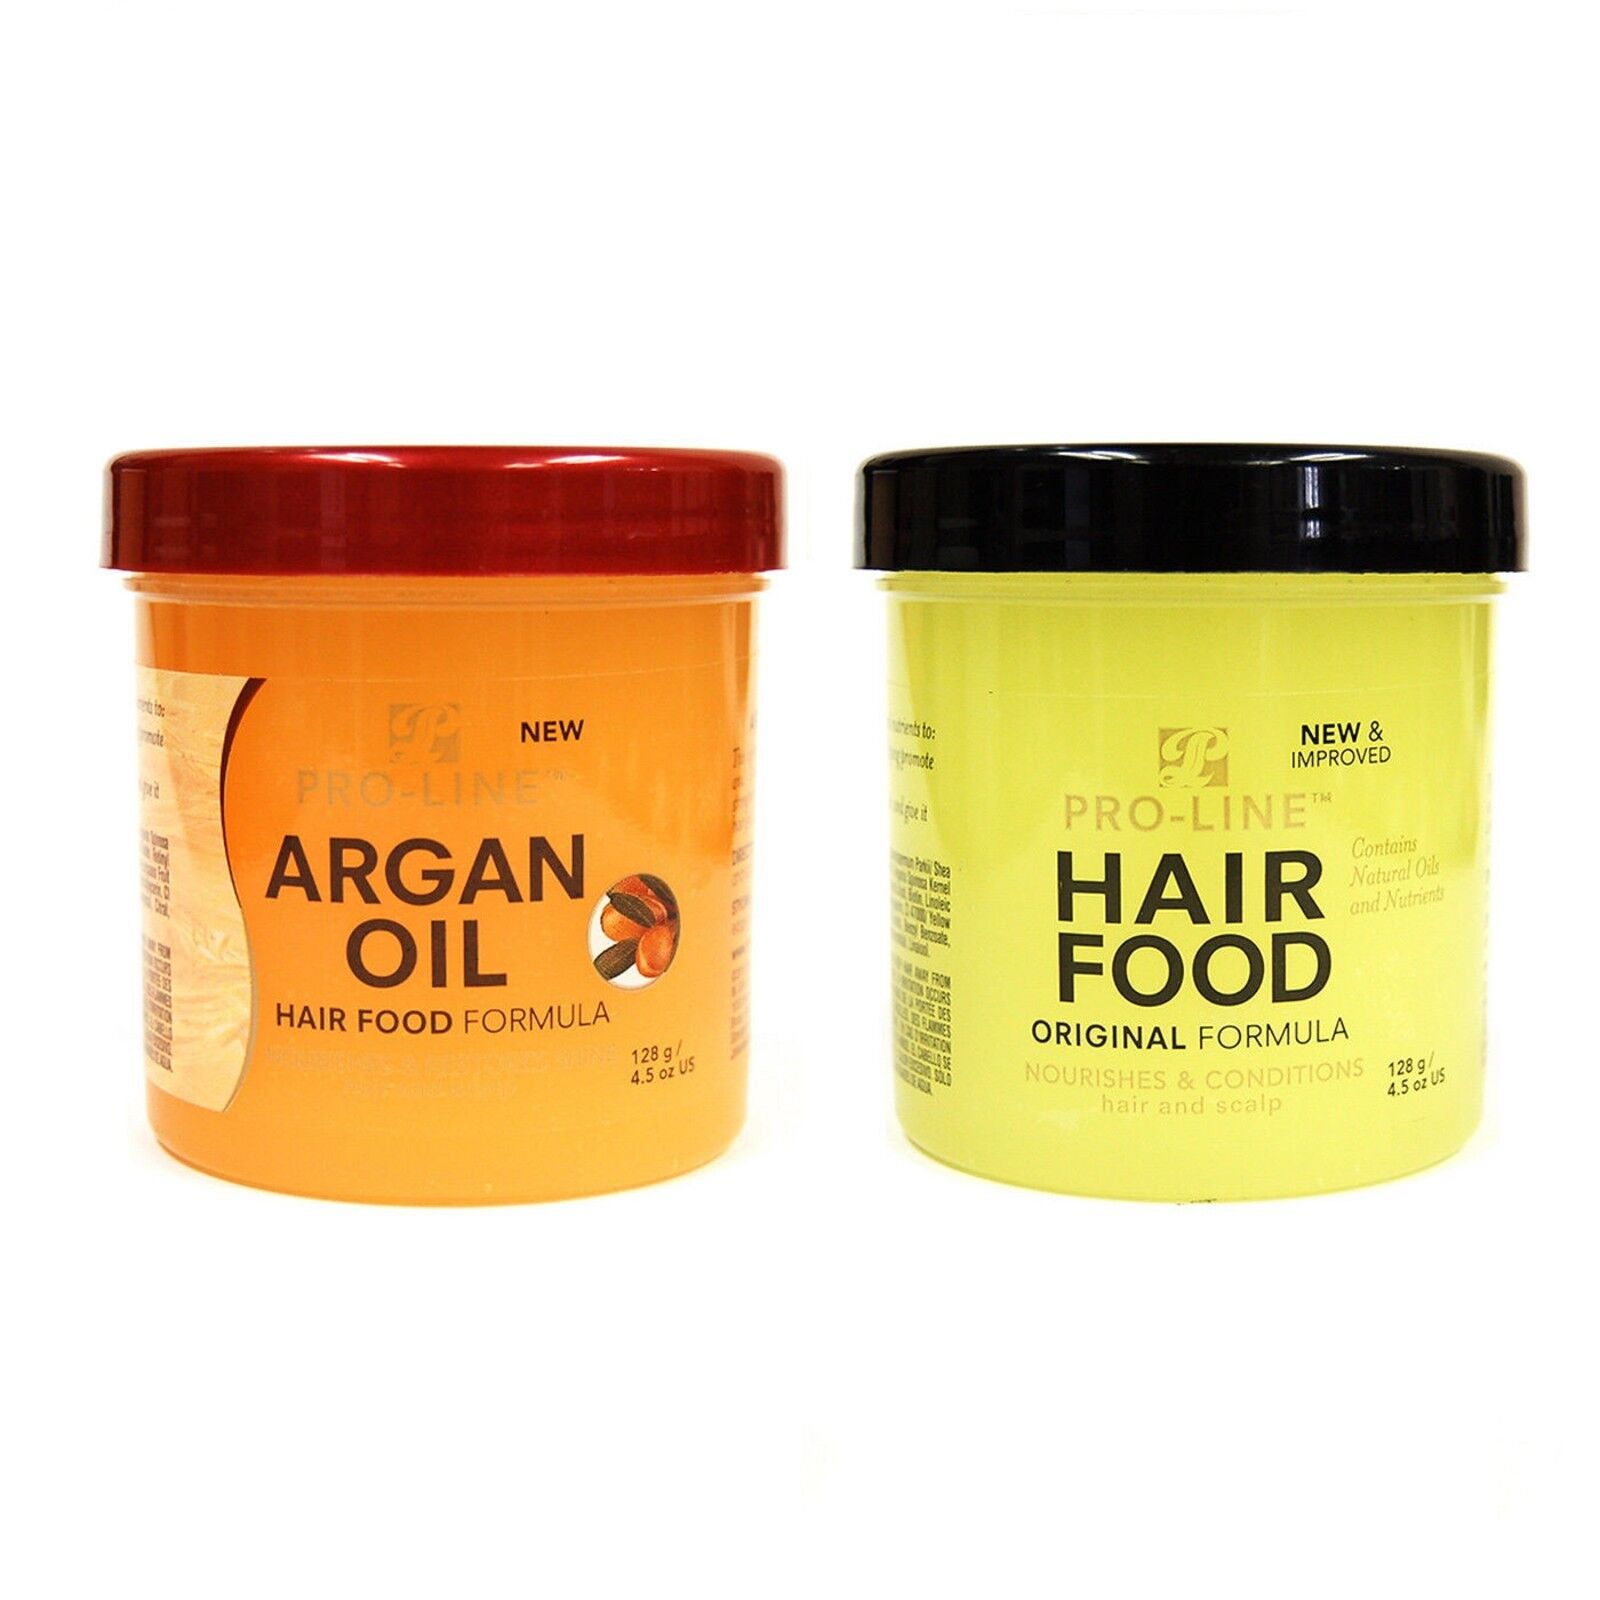 PRO-LINE HAIR FOOD ORIGINAL & ARGAN OIL HAIR FOOD 128G | eBay